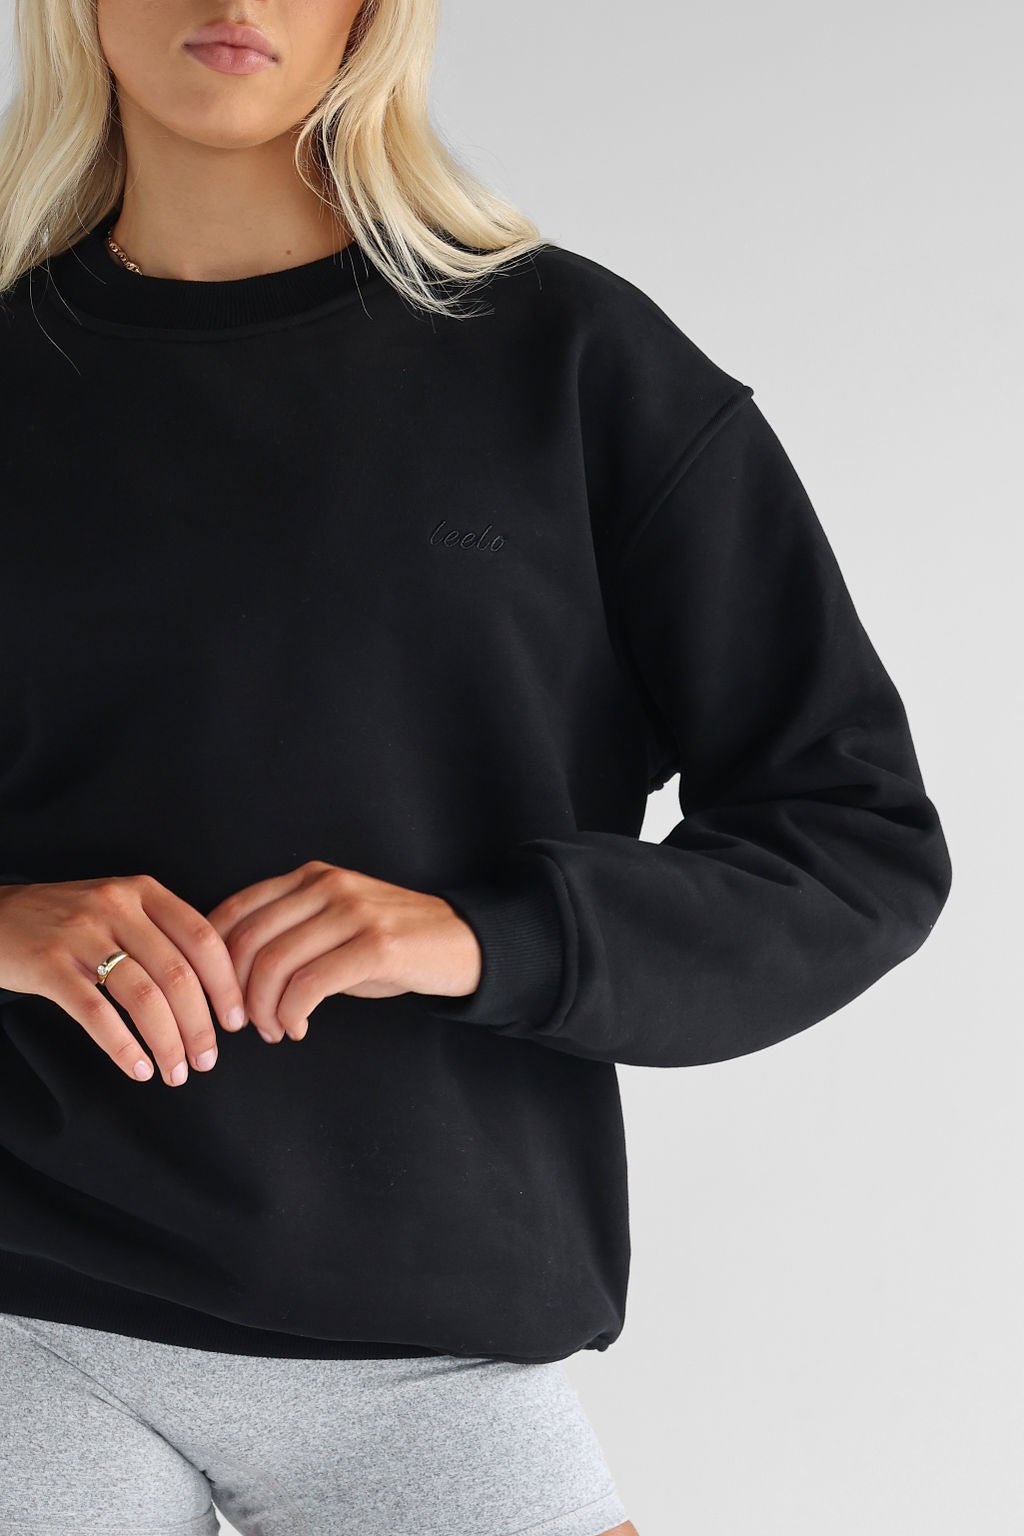 Signature Sweater - Black - LEELO ACTIVE